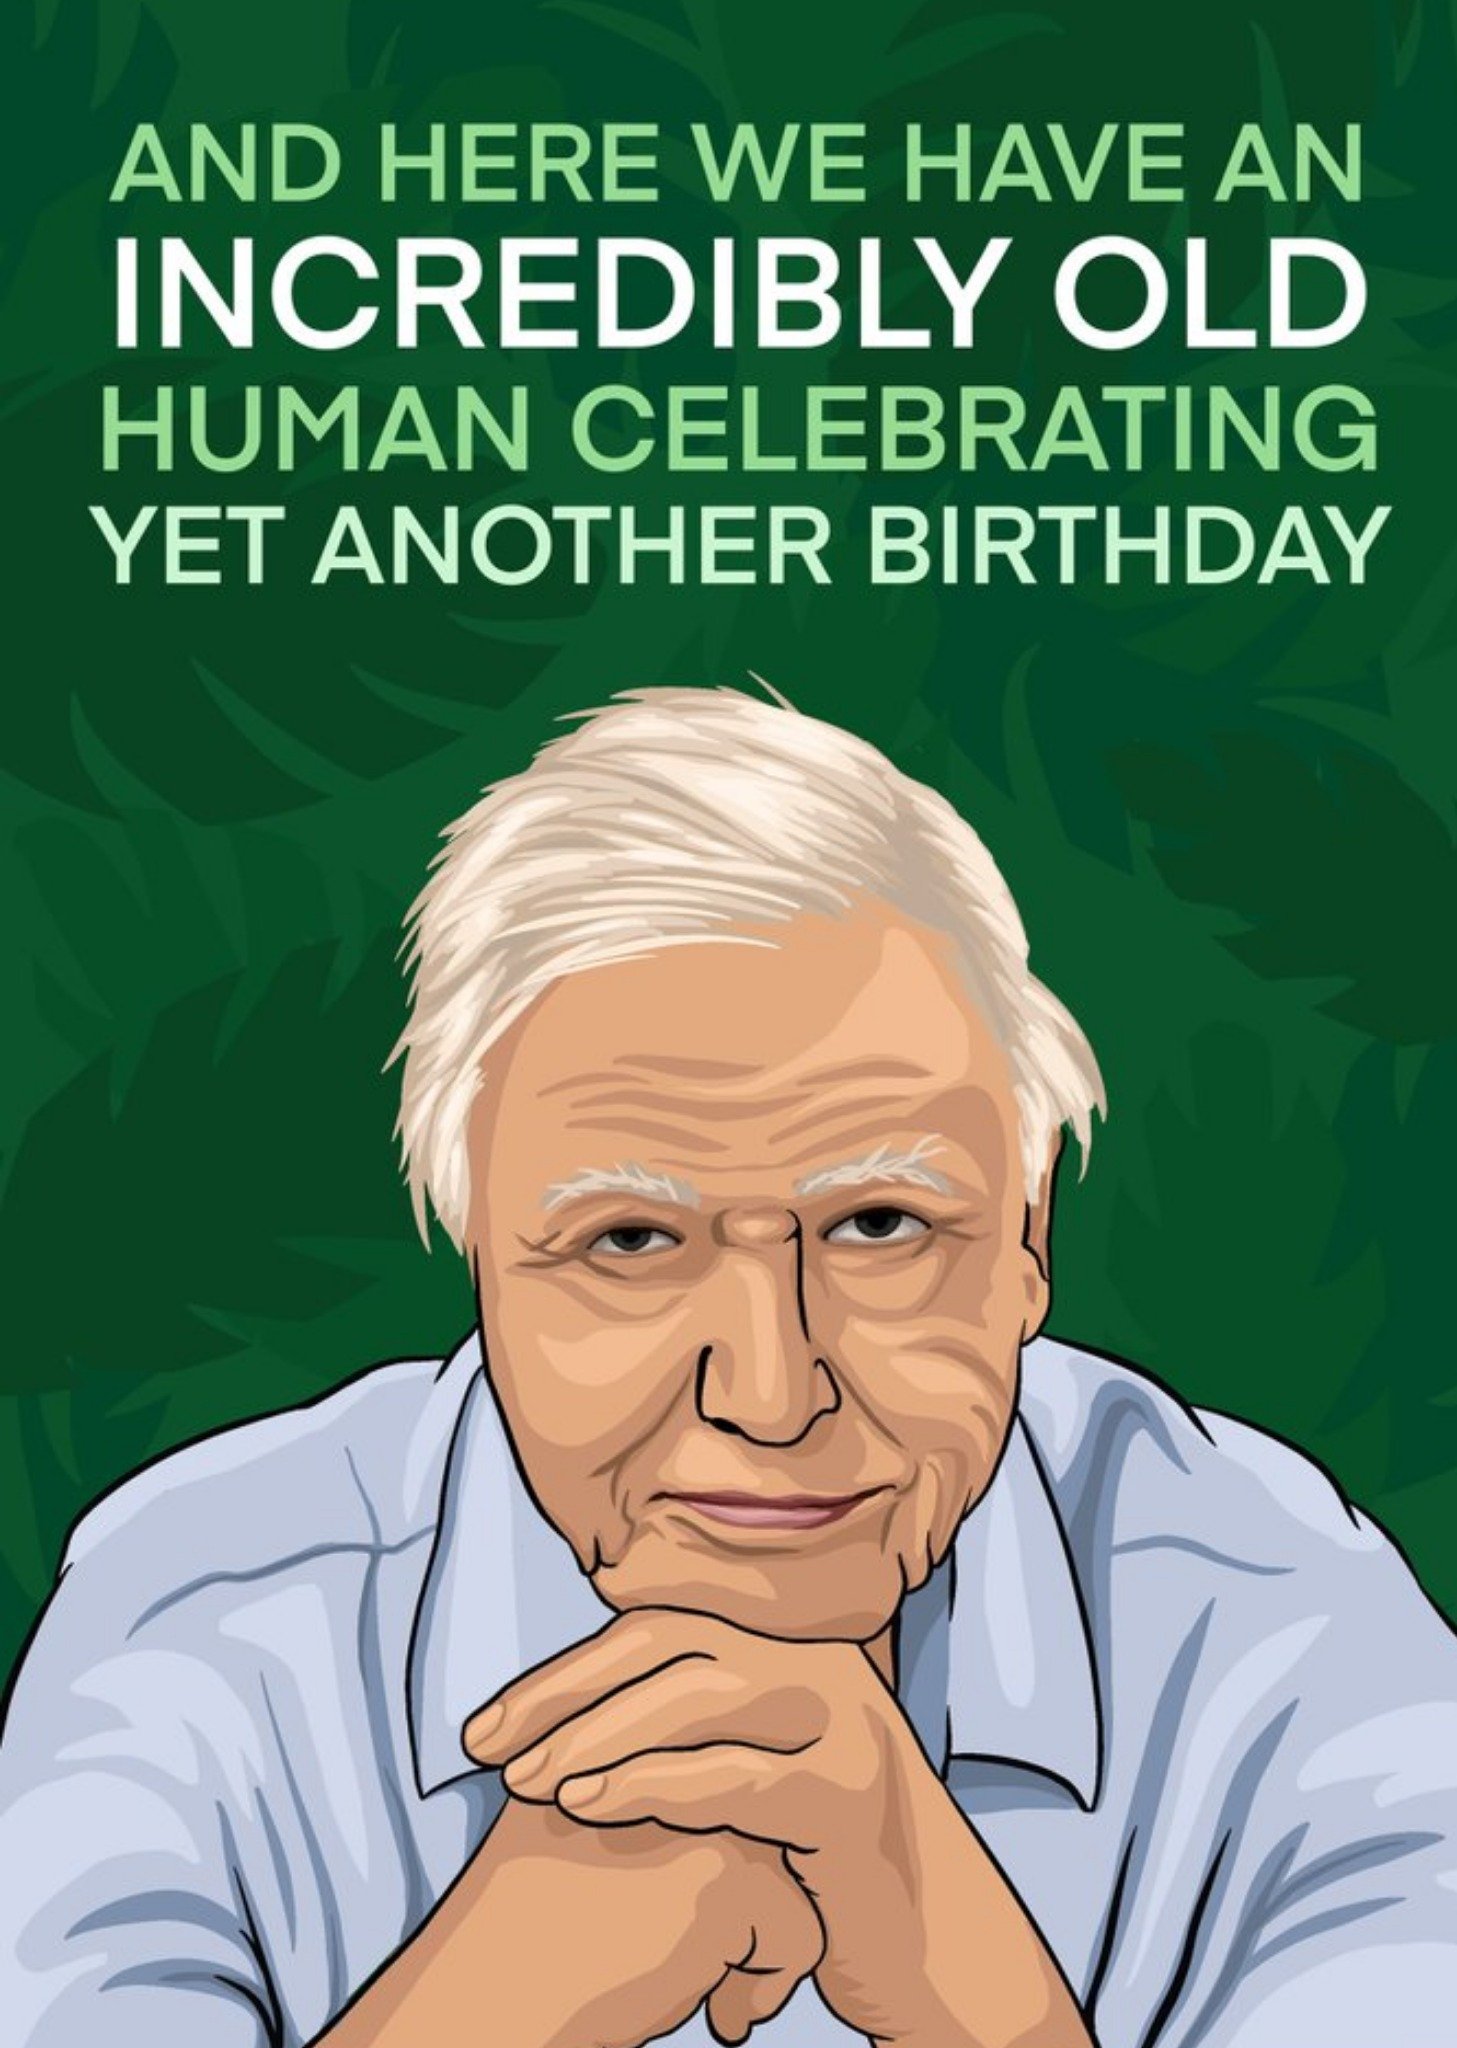 Moonpig Citrus Bunn Funny Illustration Incredibly Old Human Celebrating Yet Another Birthday Card Ec